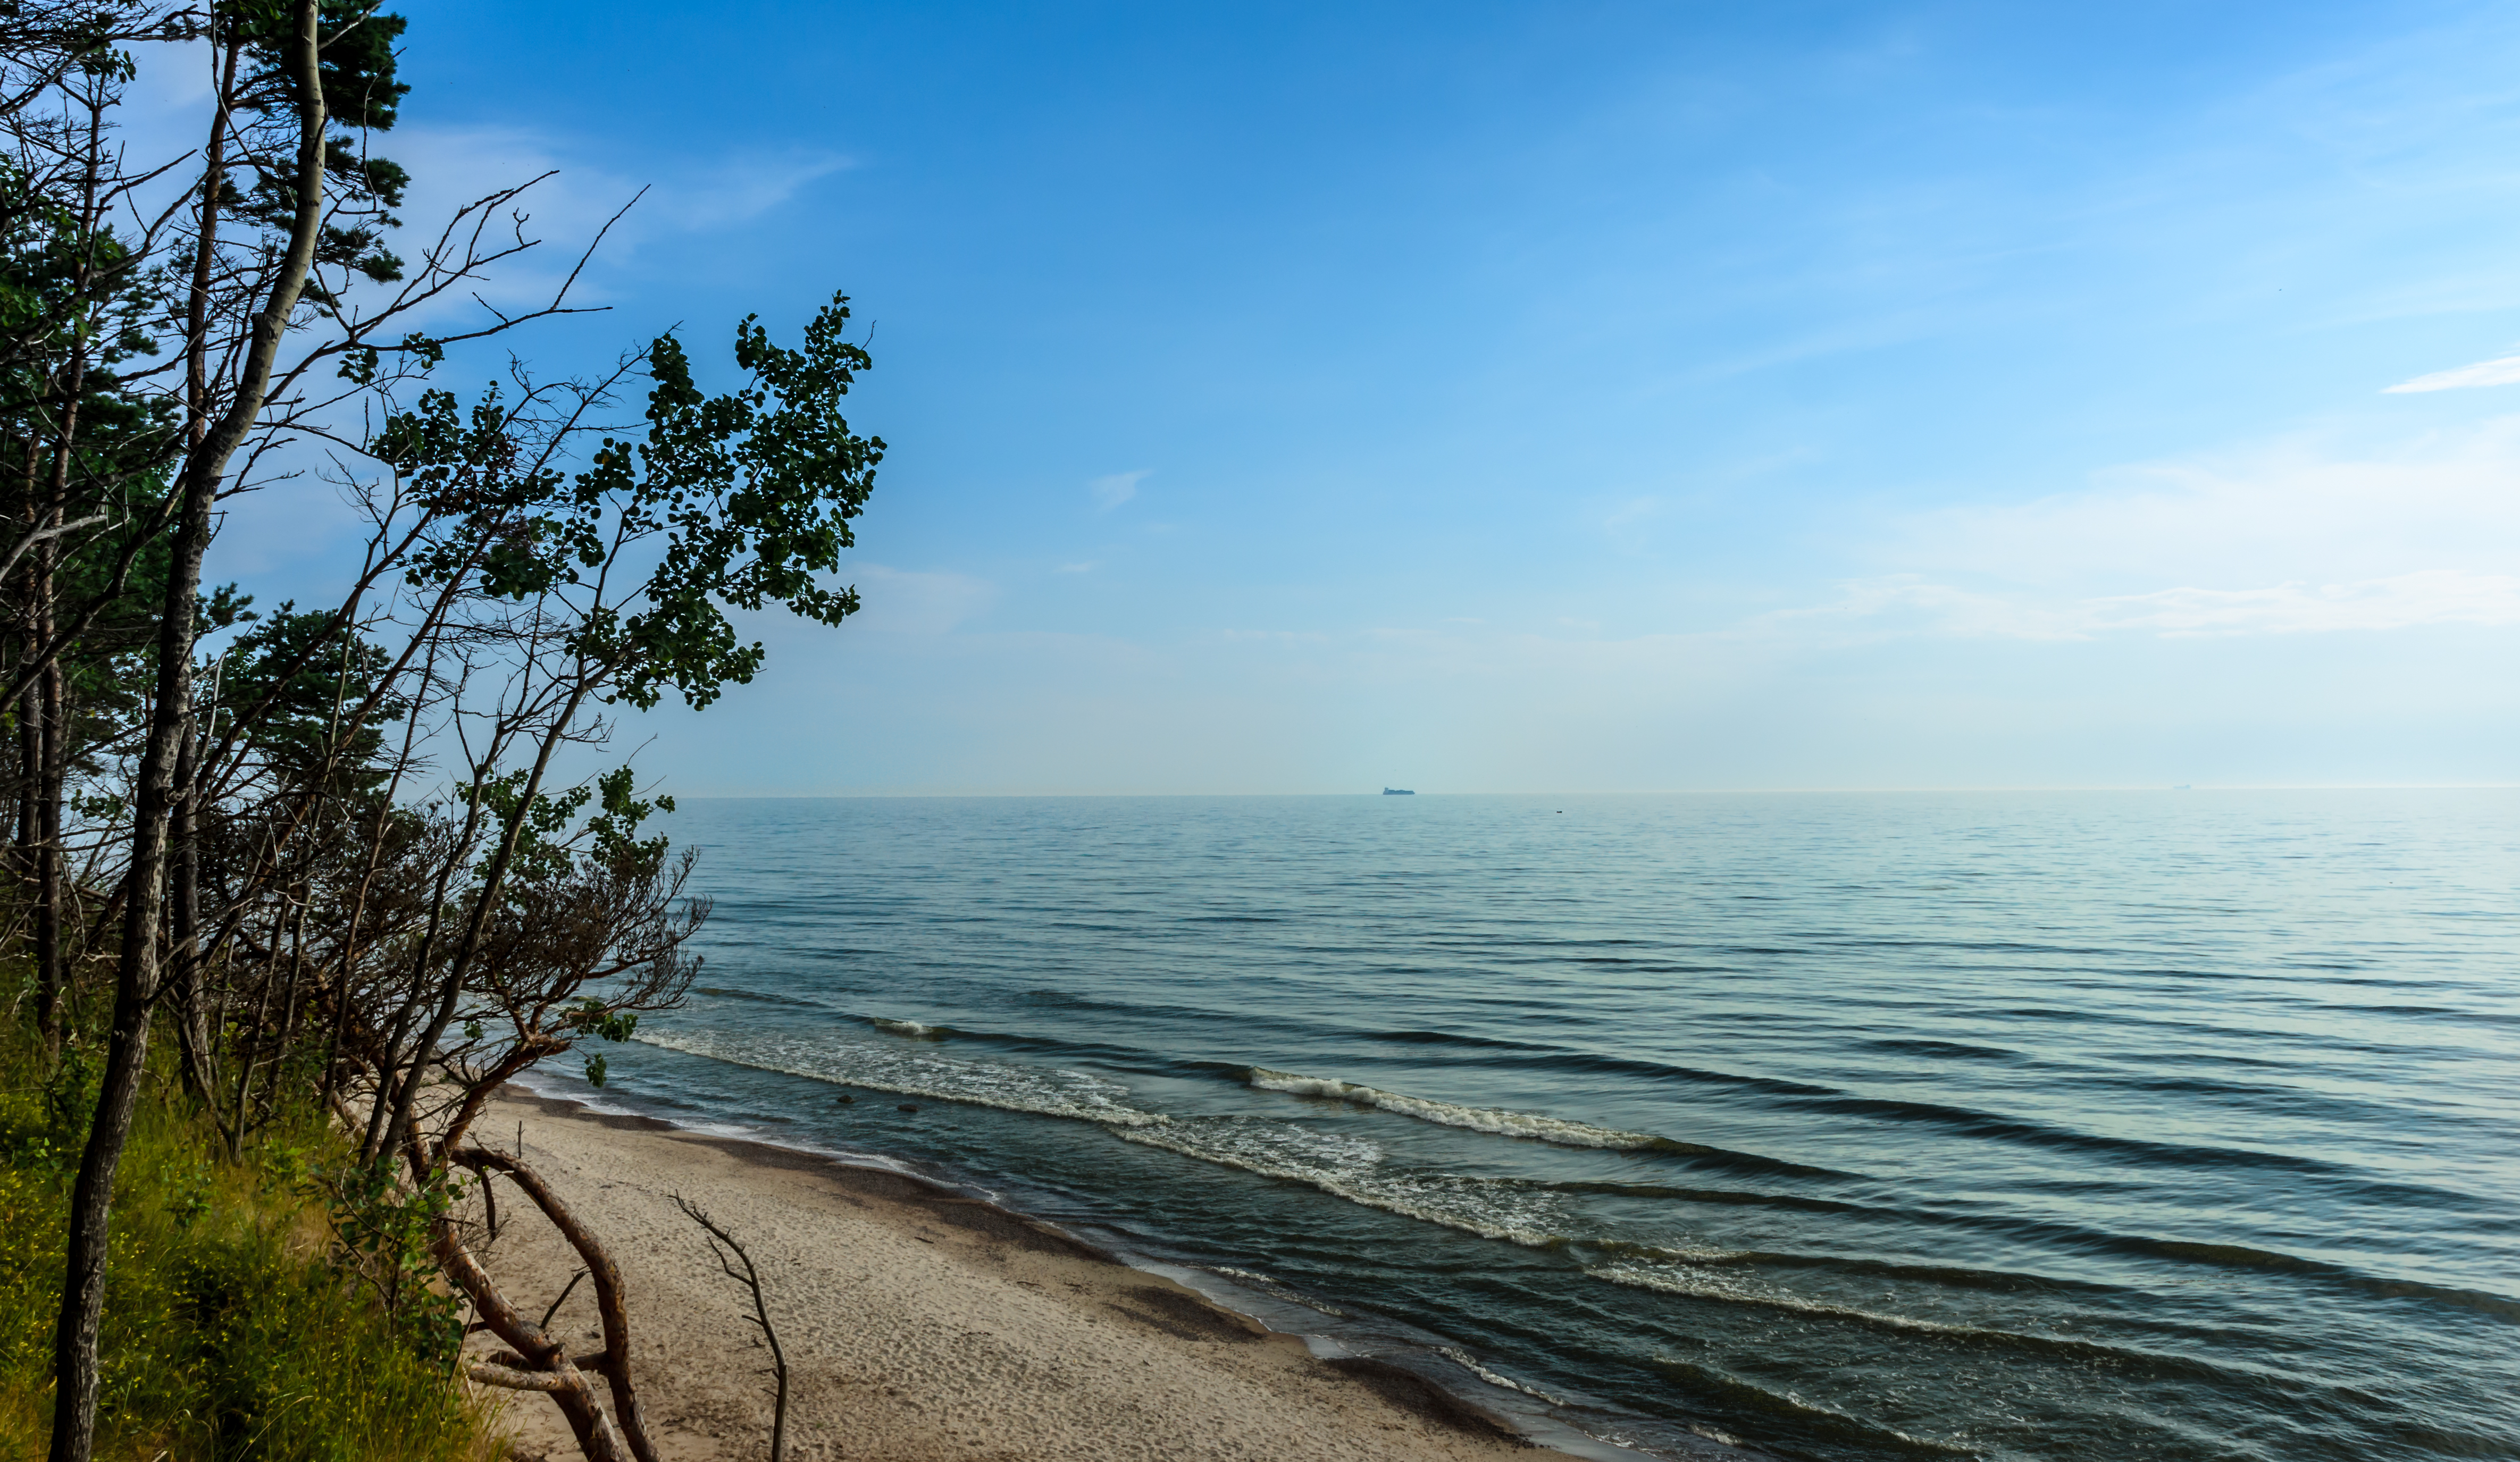 File:Sunny day on the coast on Baltic sea.jpg - Wikimedia Commons